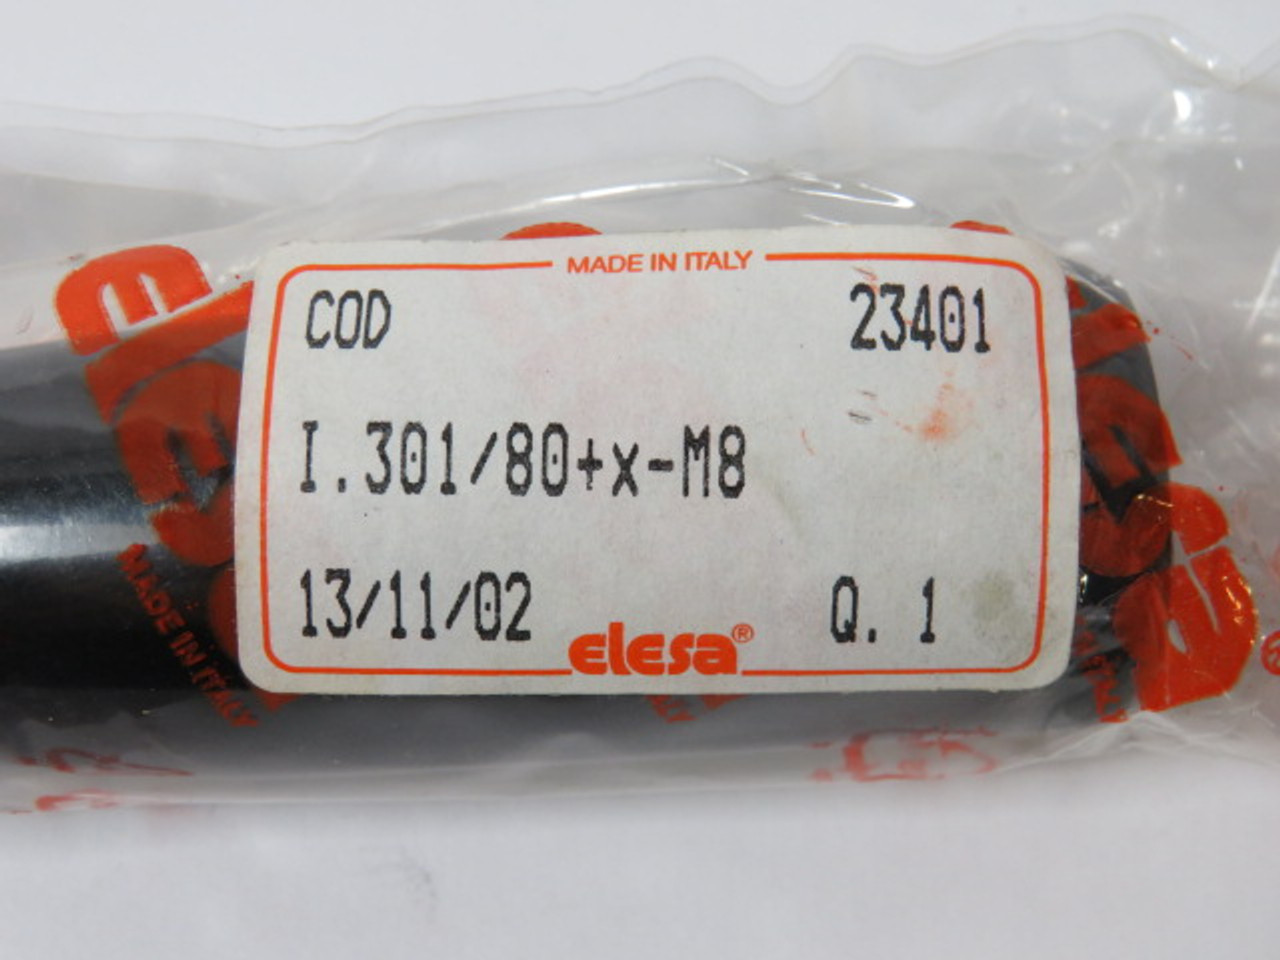 Elesa I.301/80+X-M8 Cylindrical Revolving Handles ! NWB !